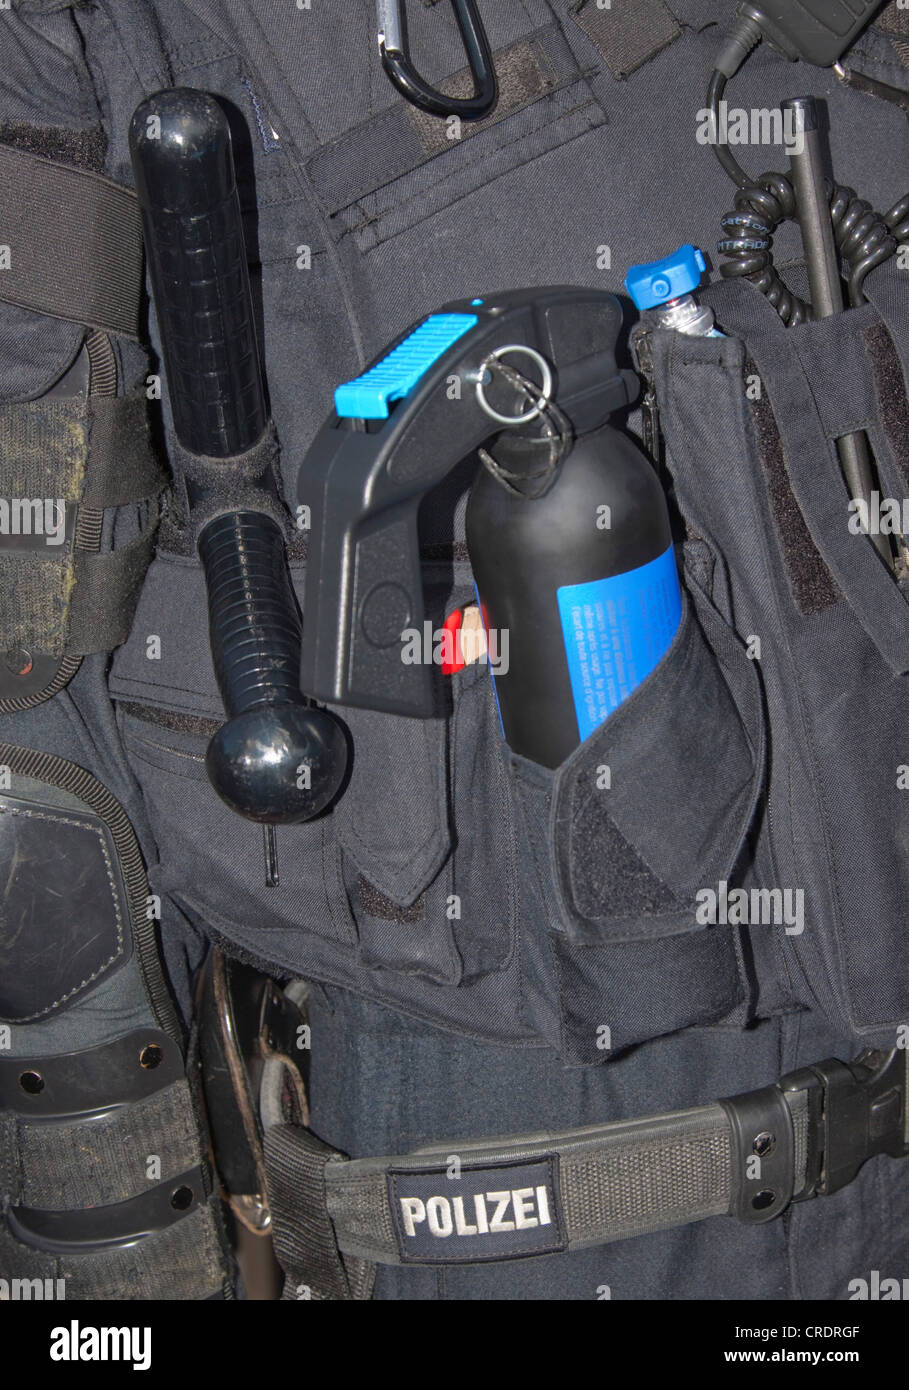 Police uniform, combat gear, baton, pepper spray, Federal Police, Germany, Europe Stock Photo